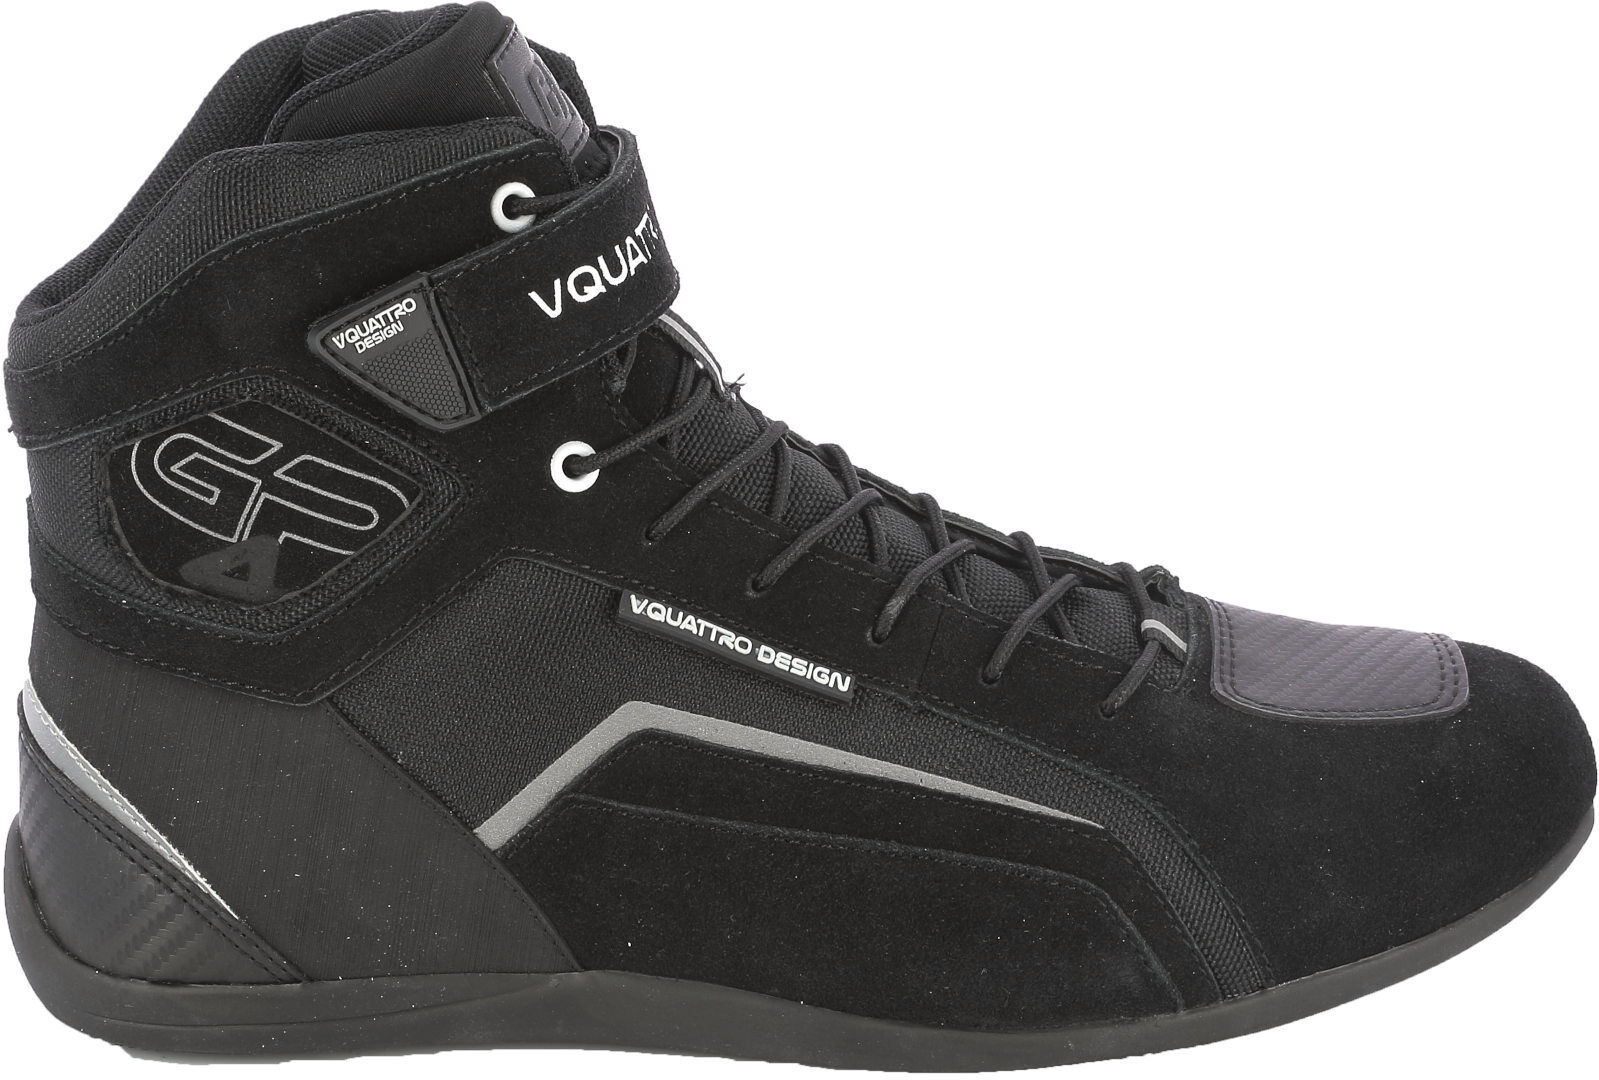 Vquattro Gp4 19 Motorcycle Shoes  - Black